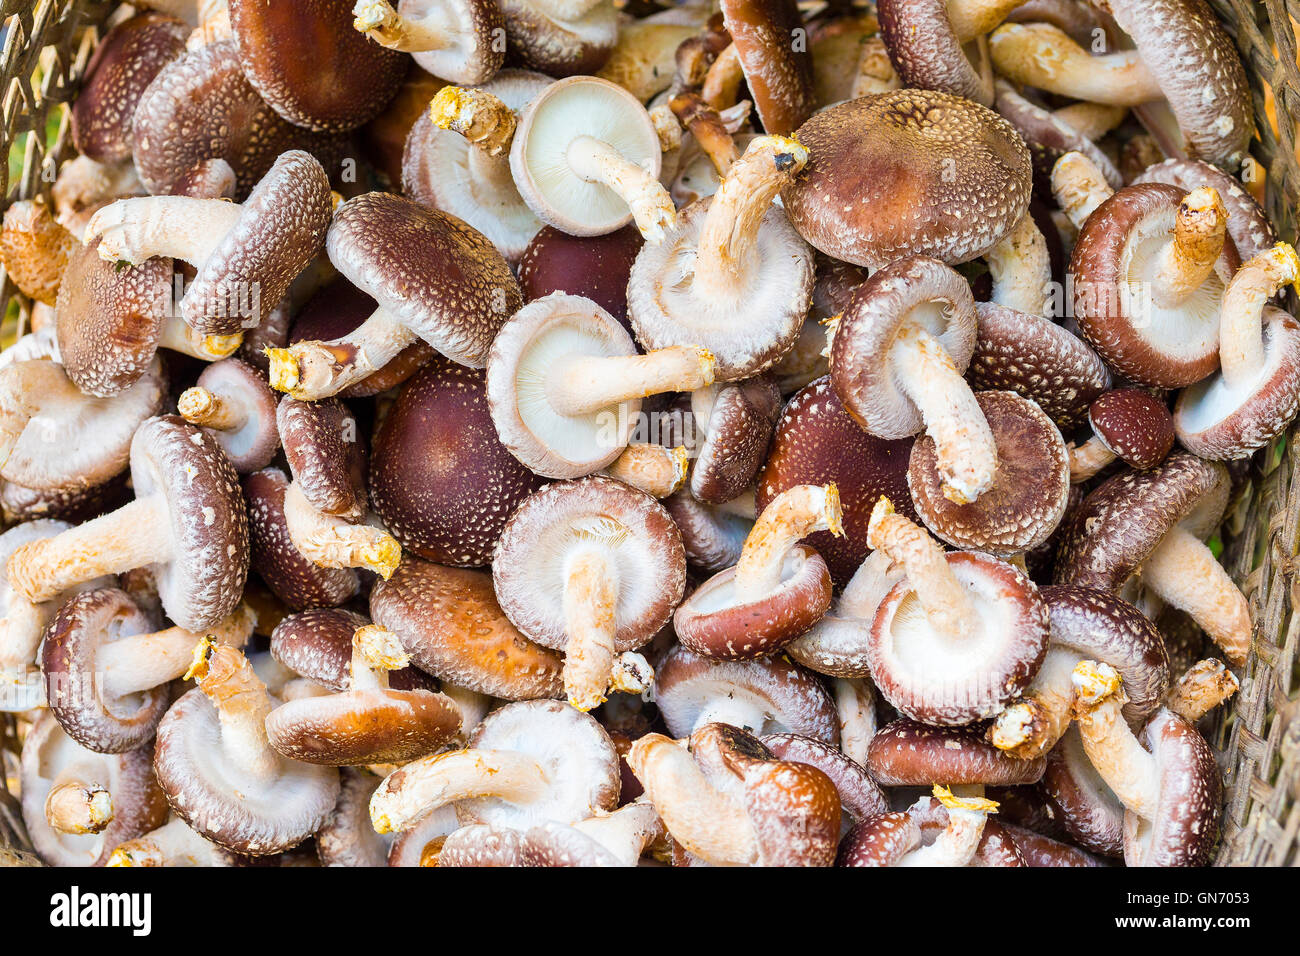 A Large Amount of Mushrooms Stock Photo